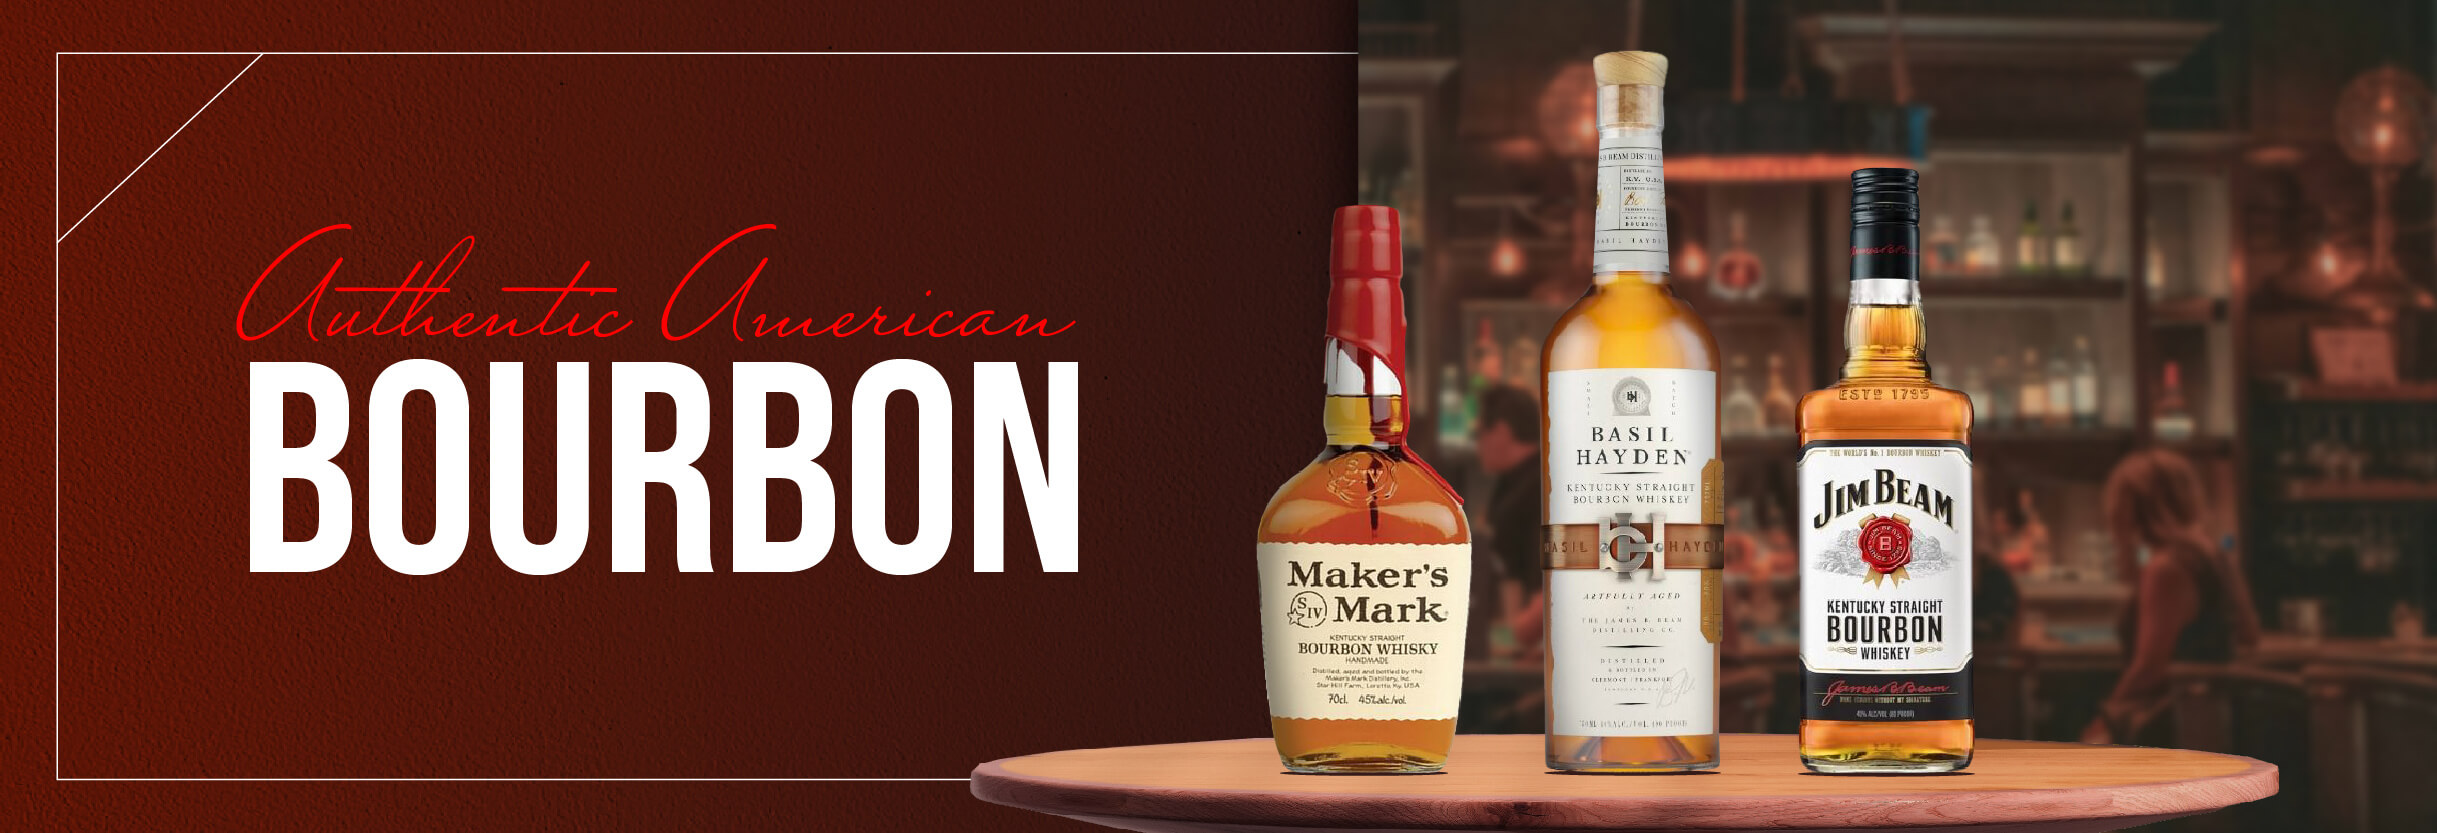 Authentic American Bourbon 